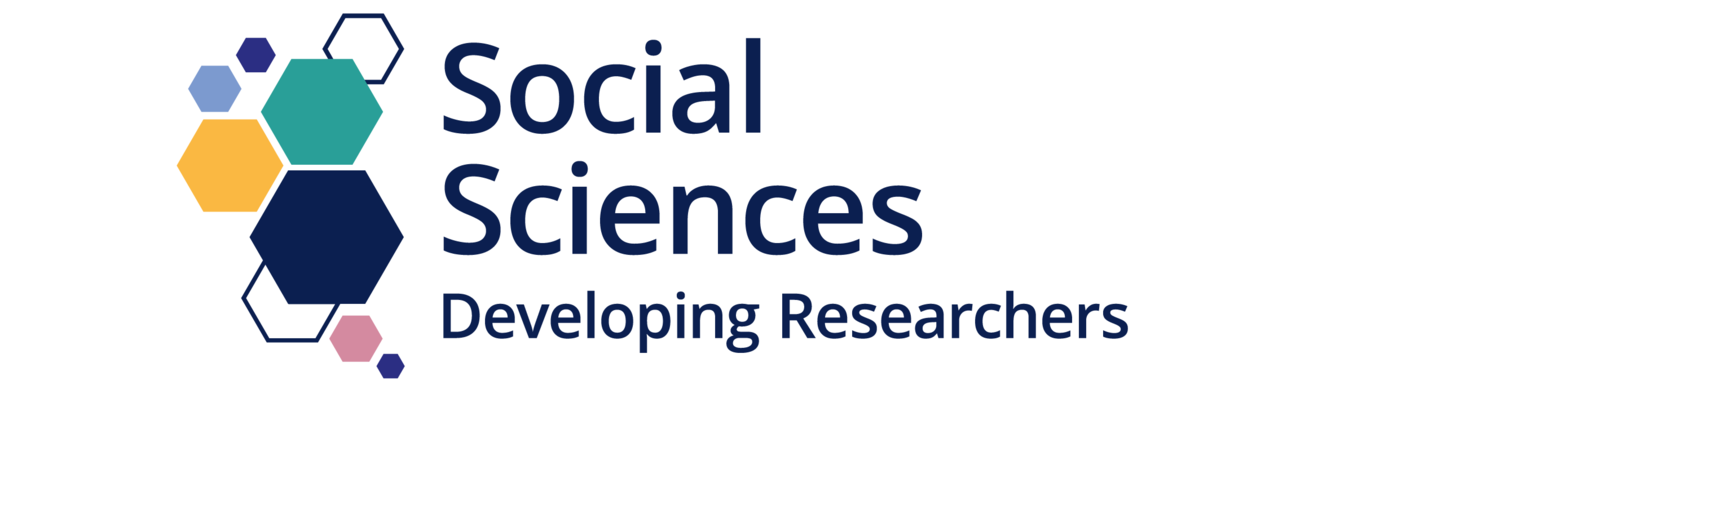 social sciences developing researchers masterlogo3